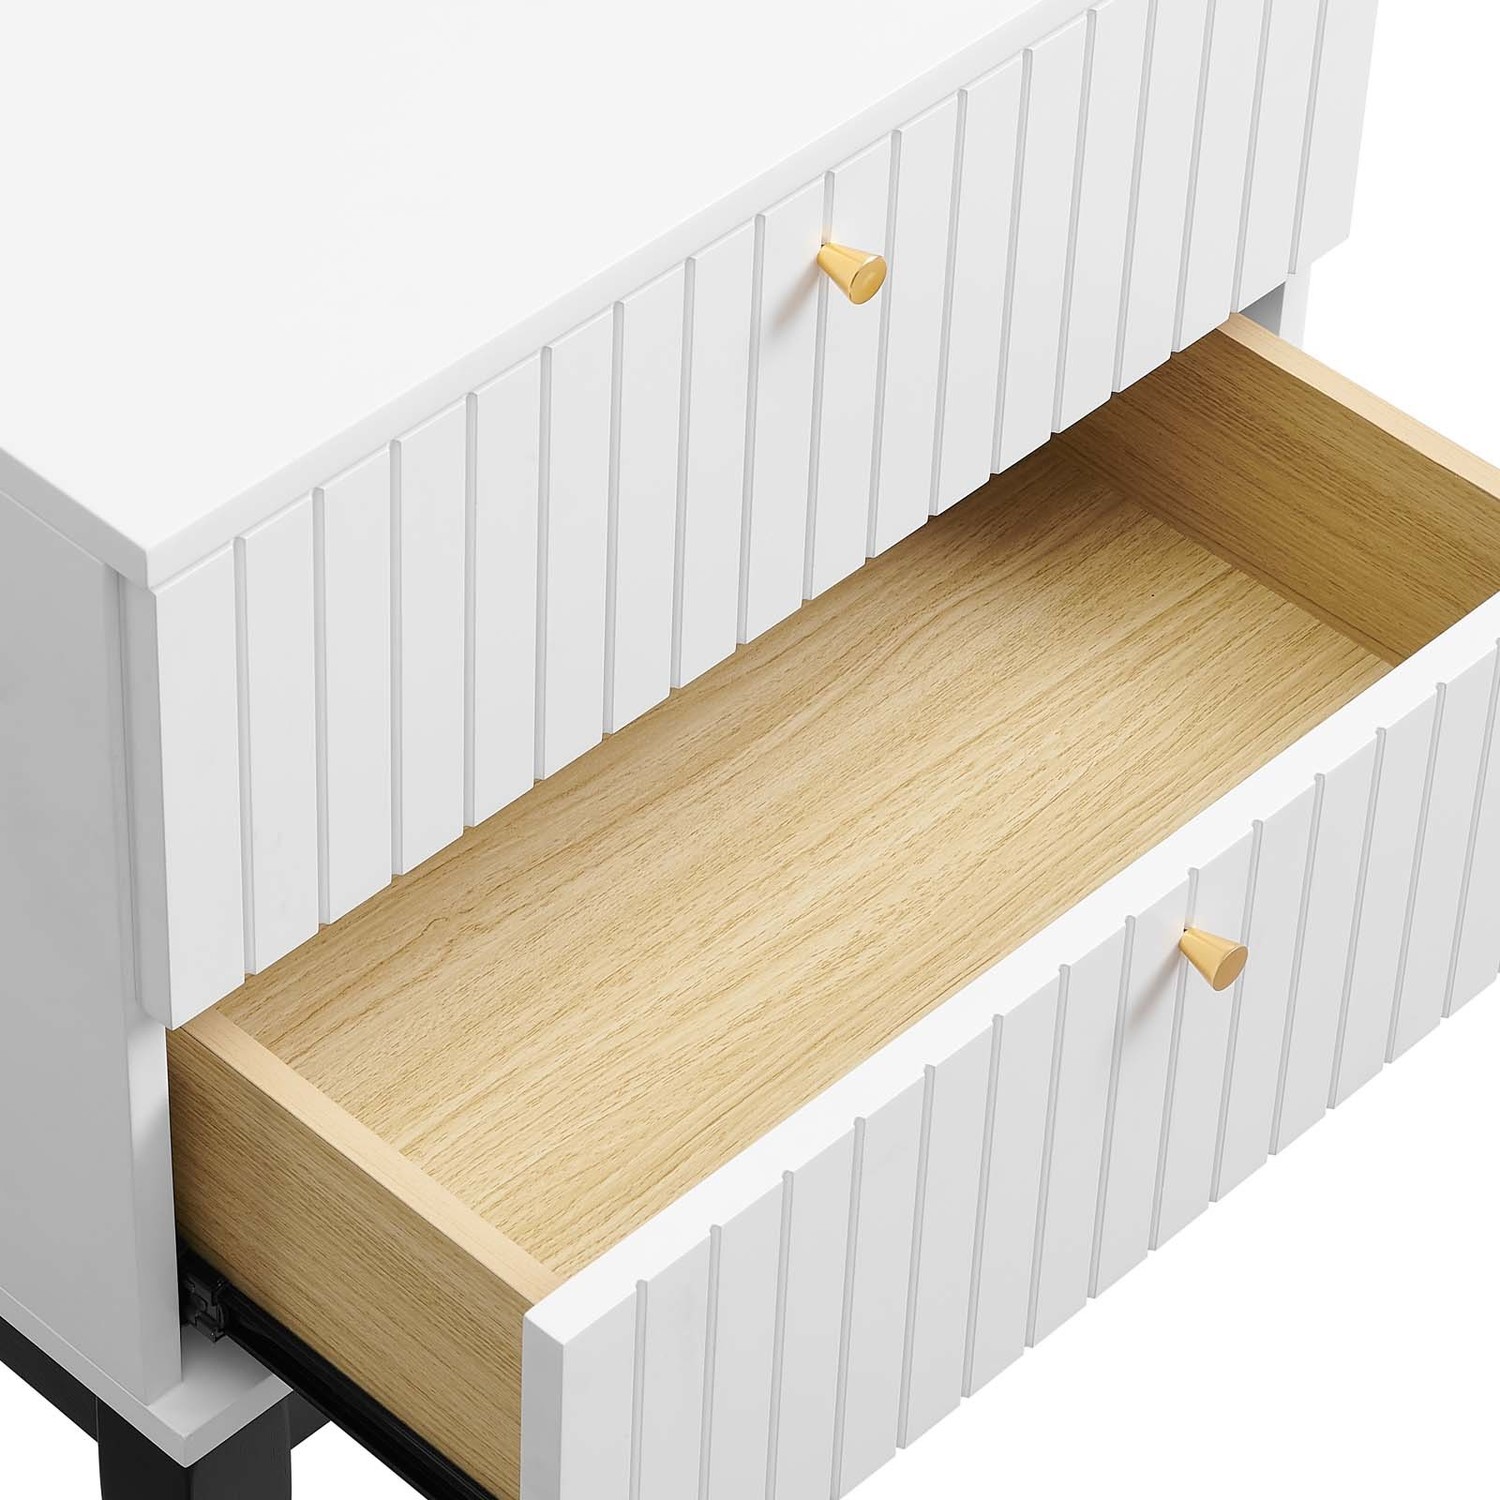 twin frame Modway Furniture Bedroom Sets White